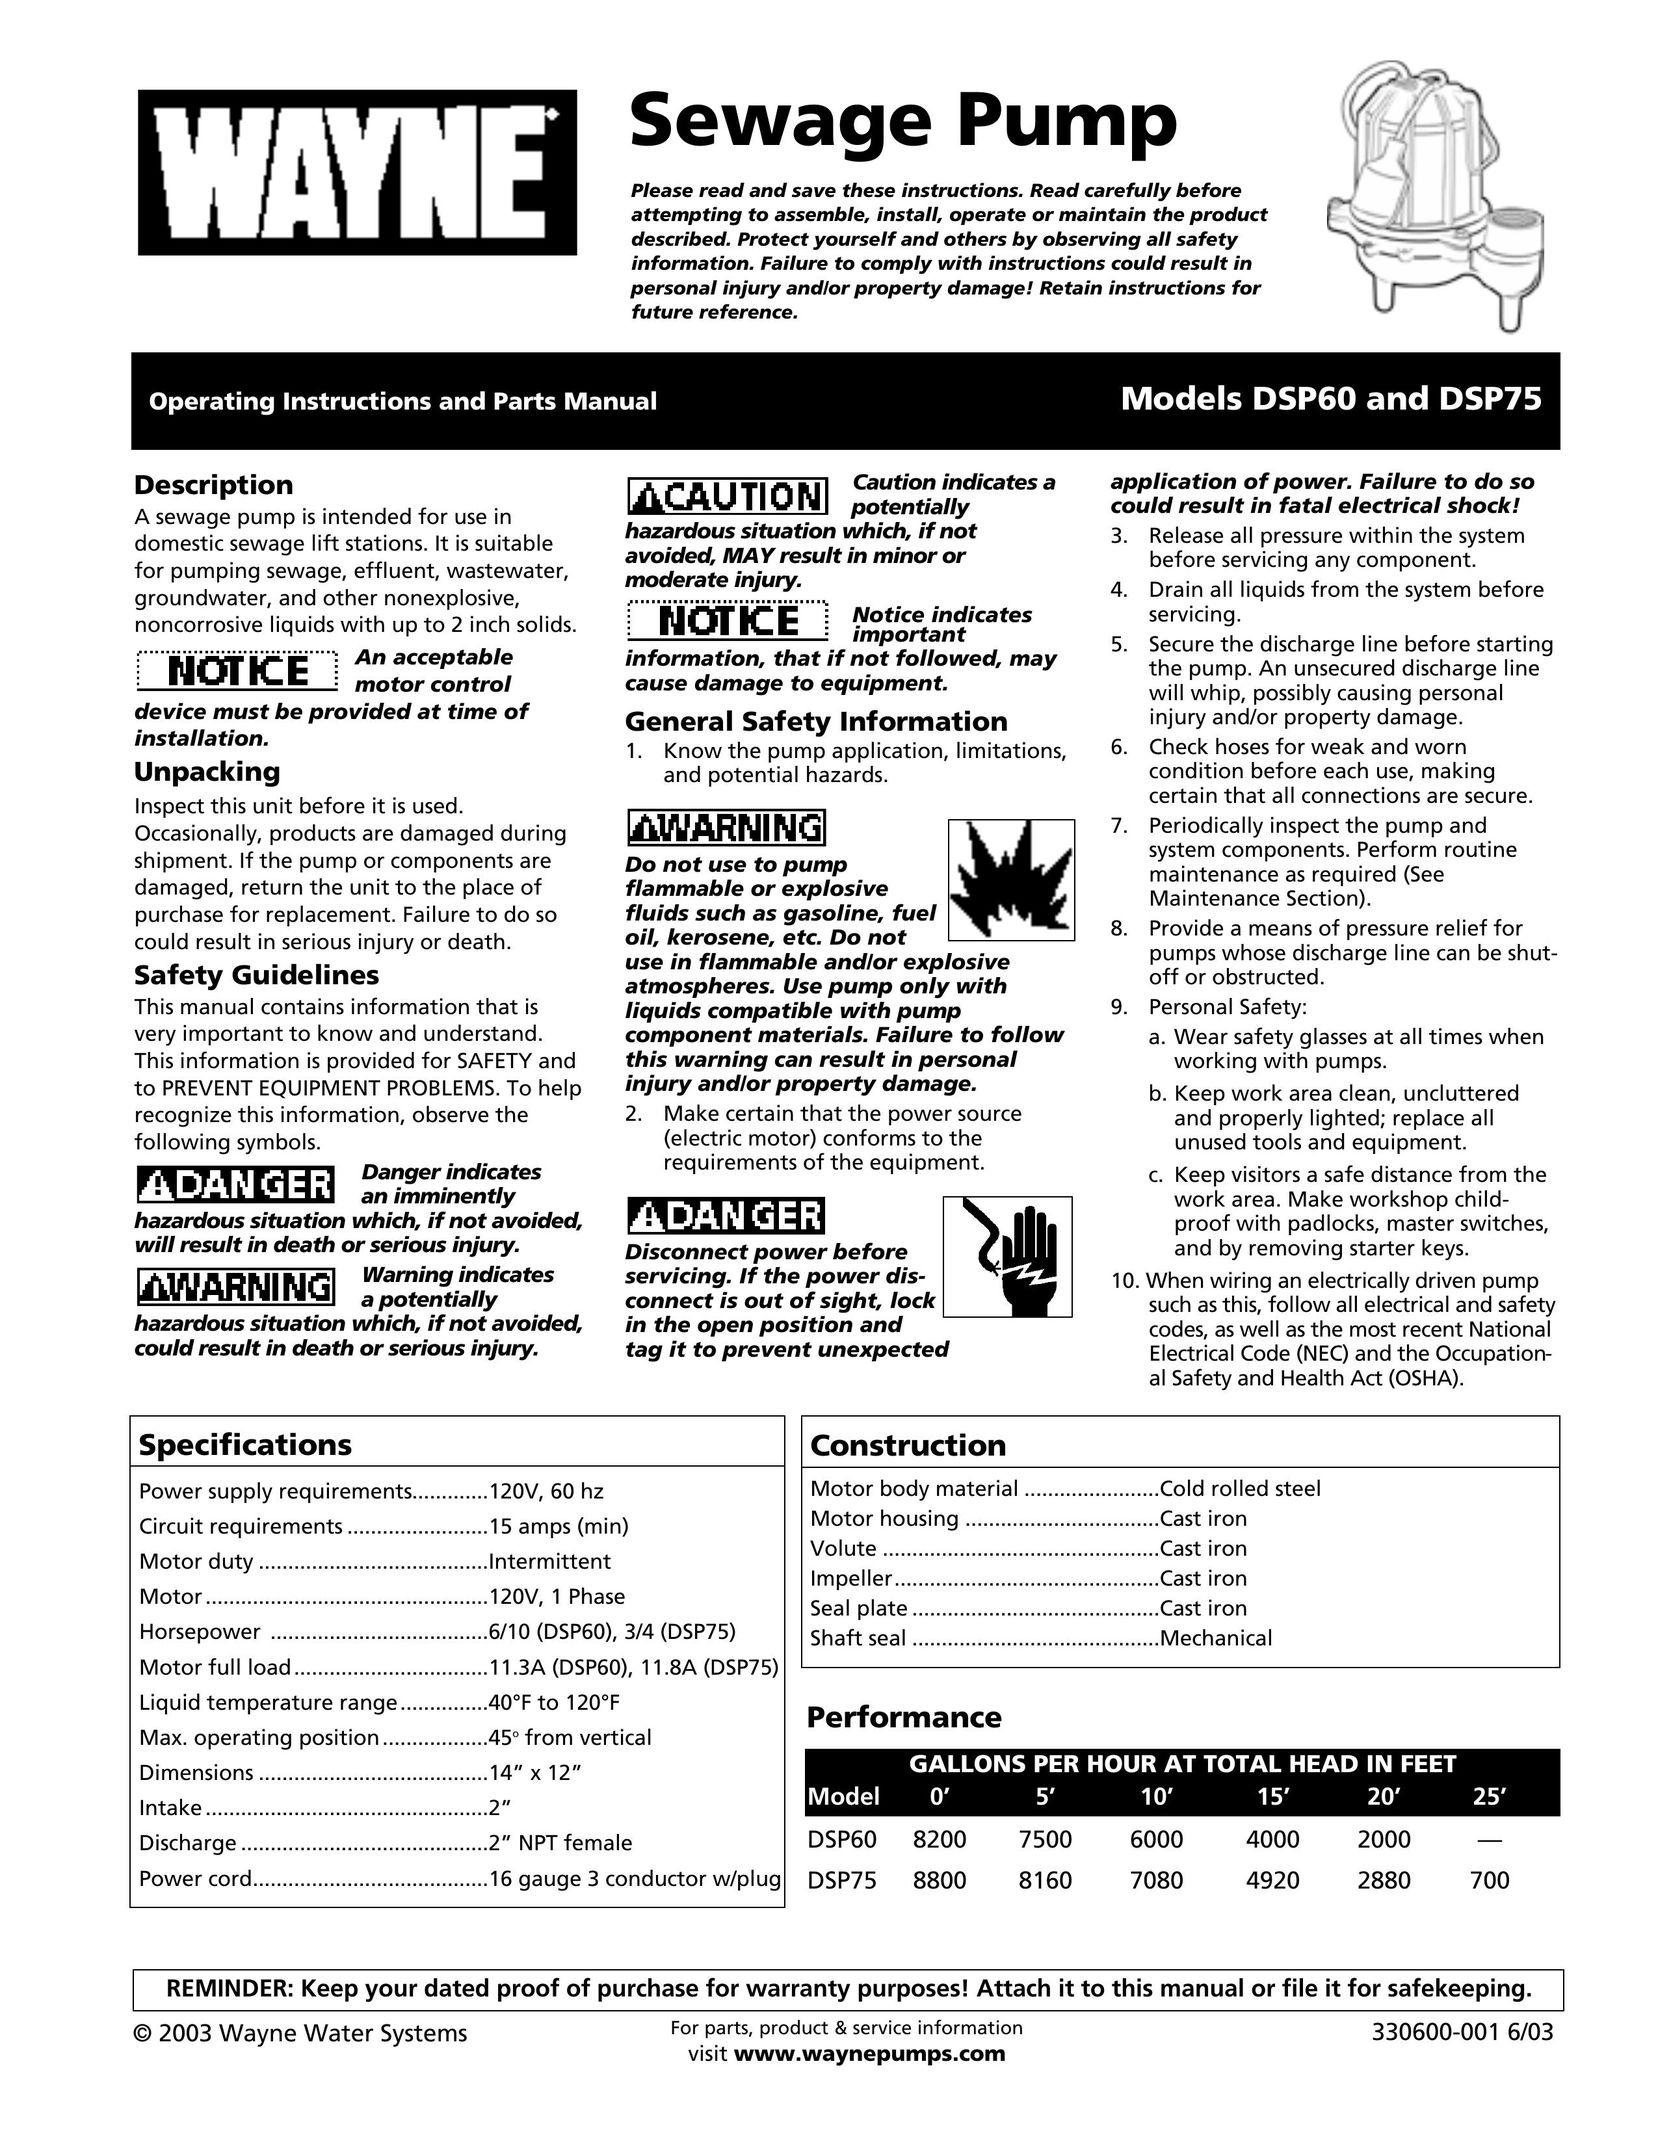 Wayne 330600-001 Septic System User Manual